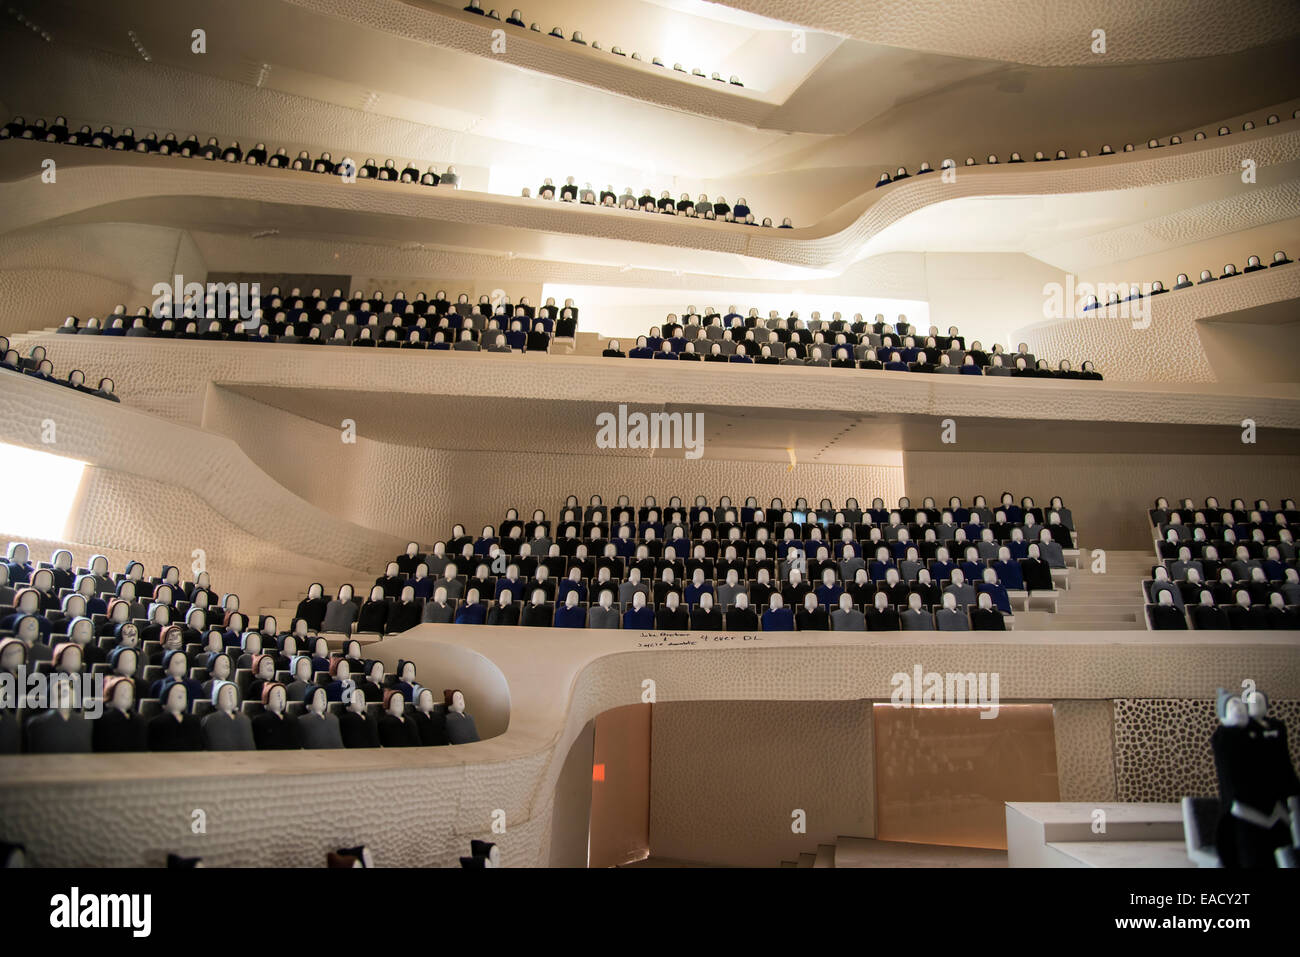 Model of the interior of the Elbe Philharmonic Hall, HafenCity, Hamburg, Germany Stock Photo